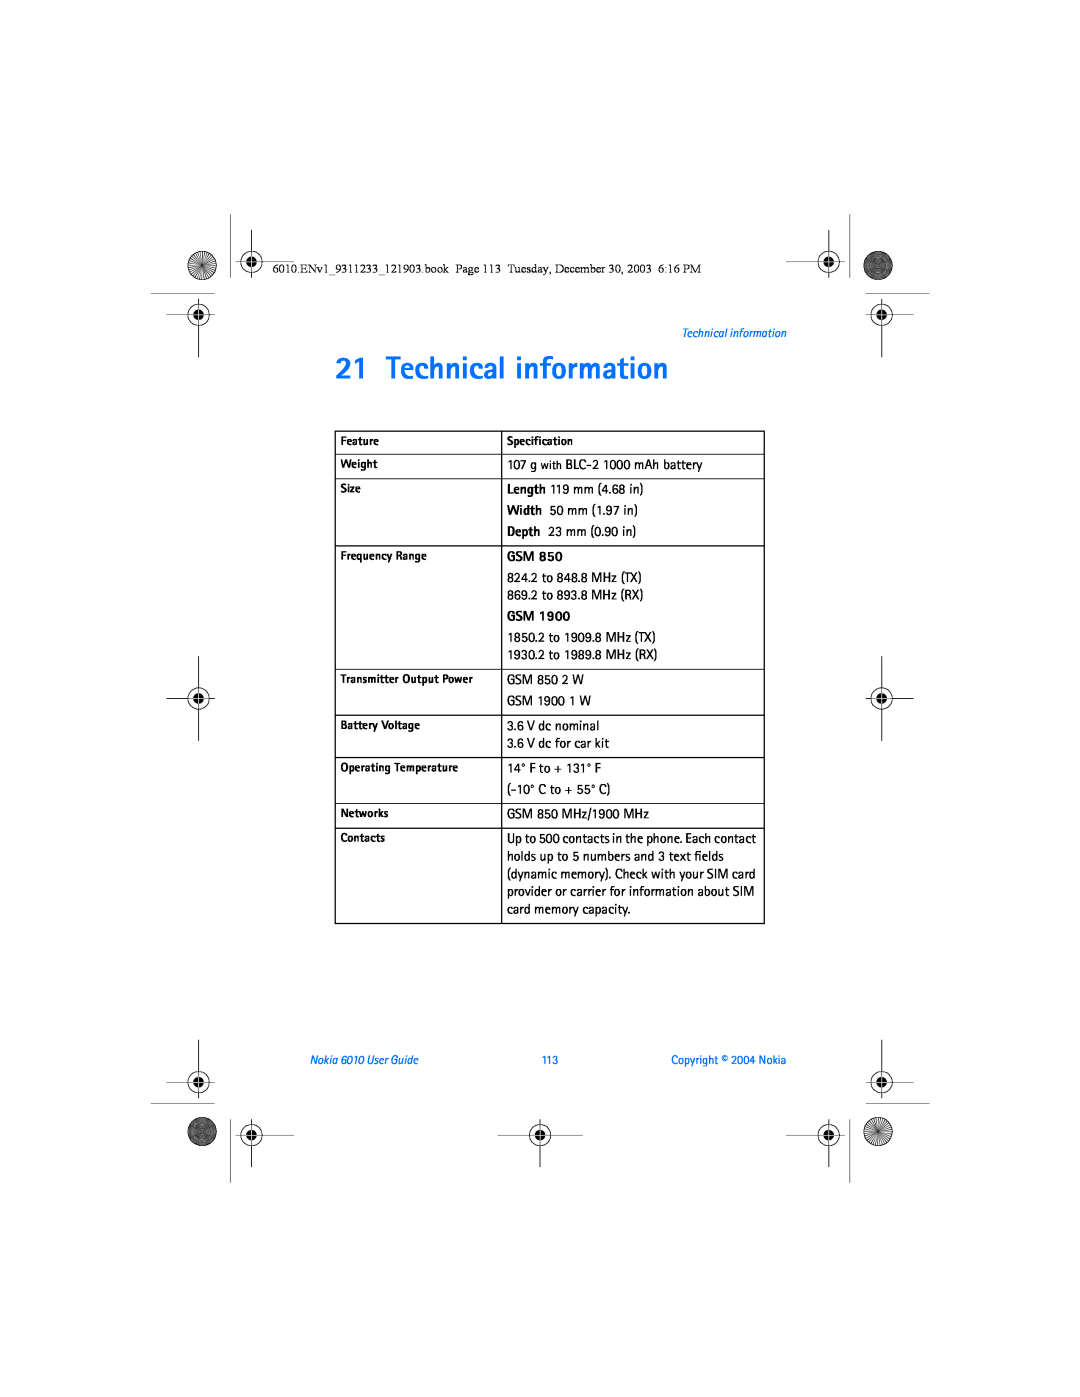 Nokia 6010 manual Technical information 